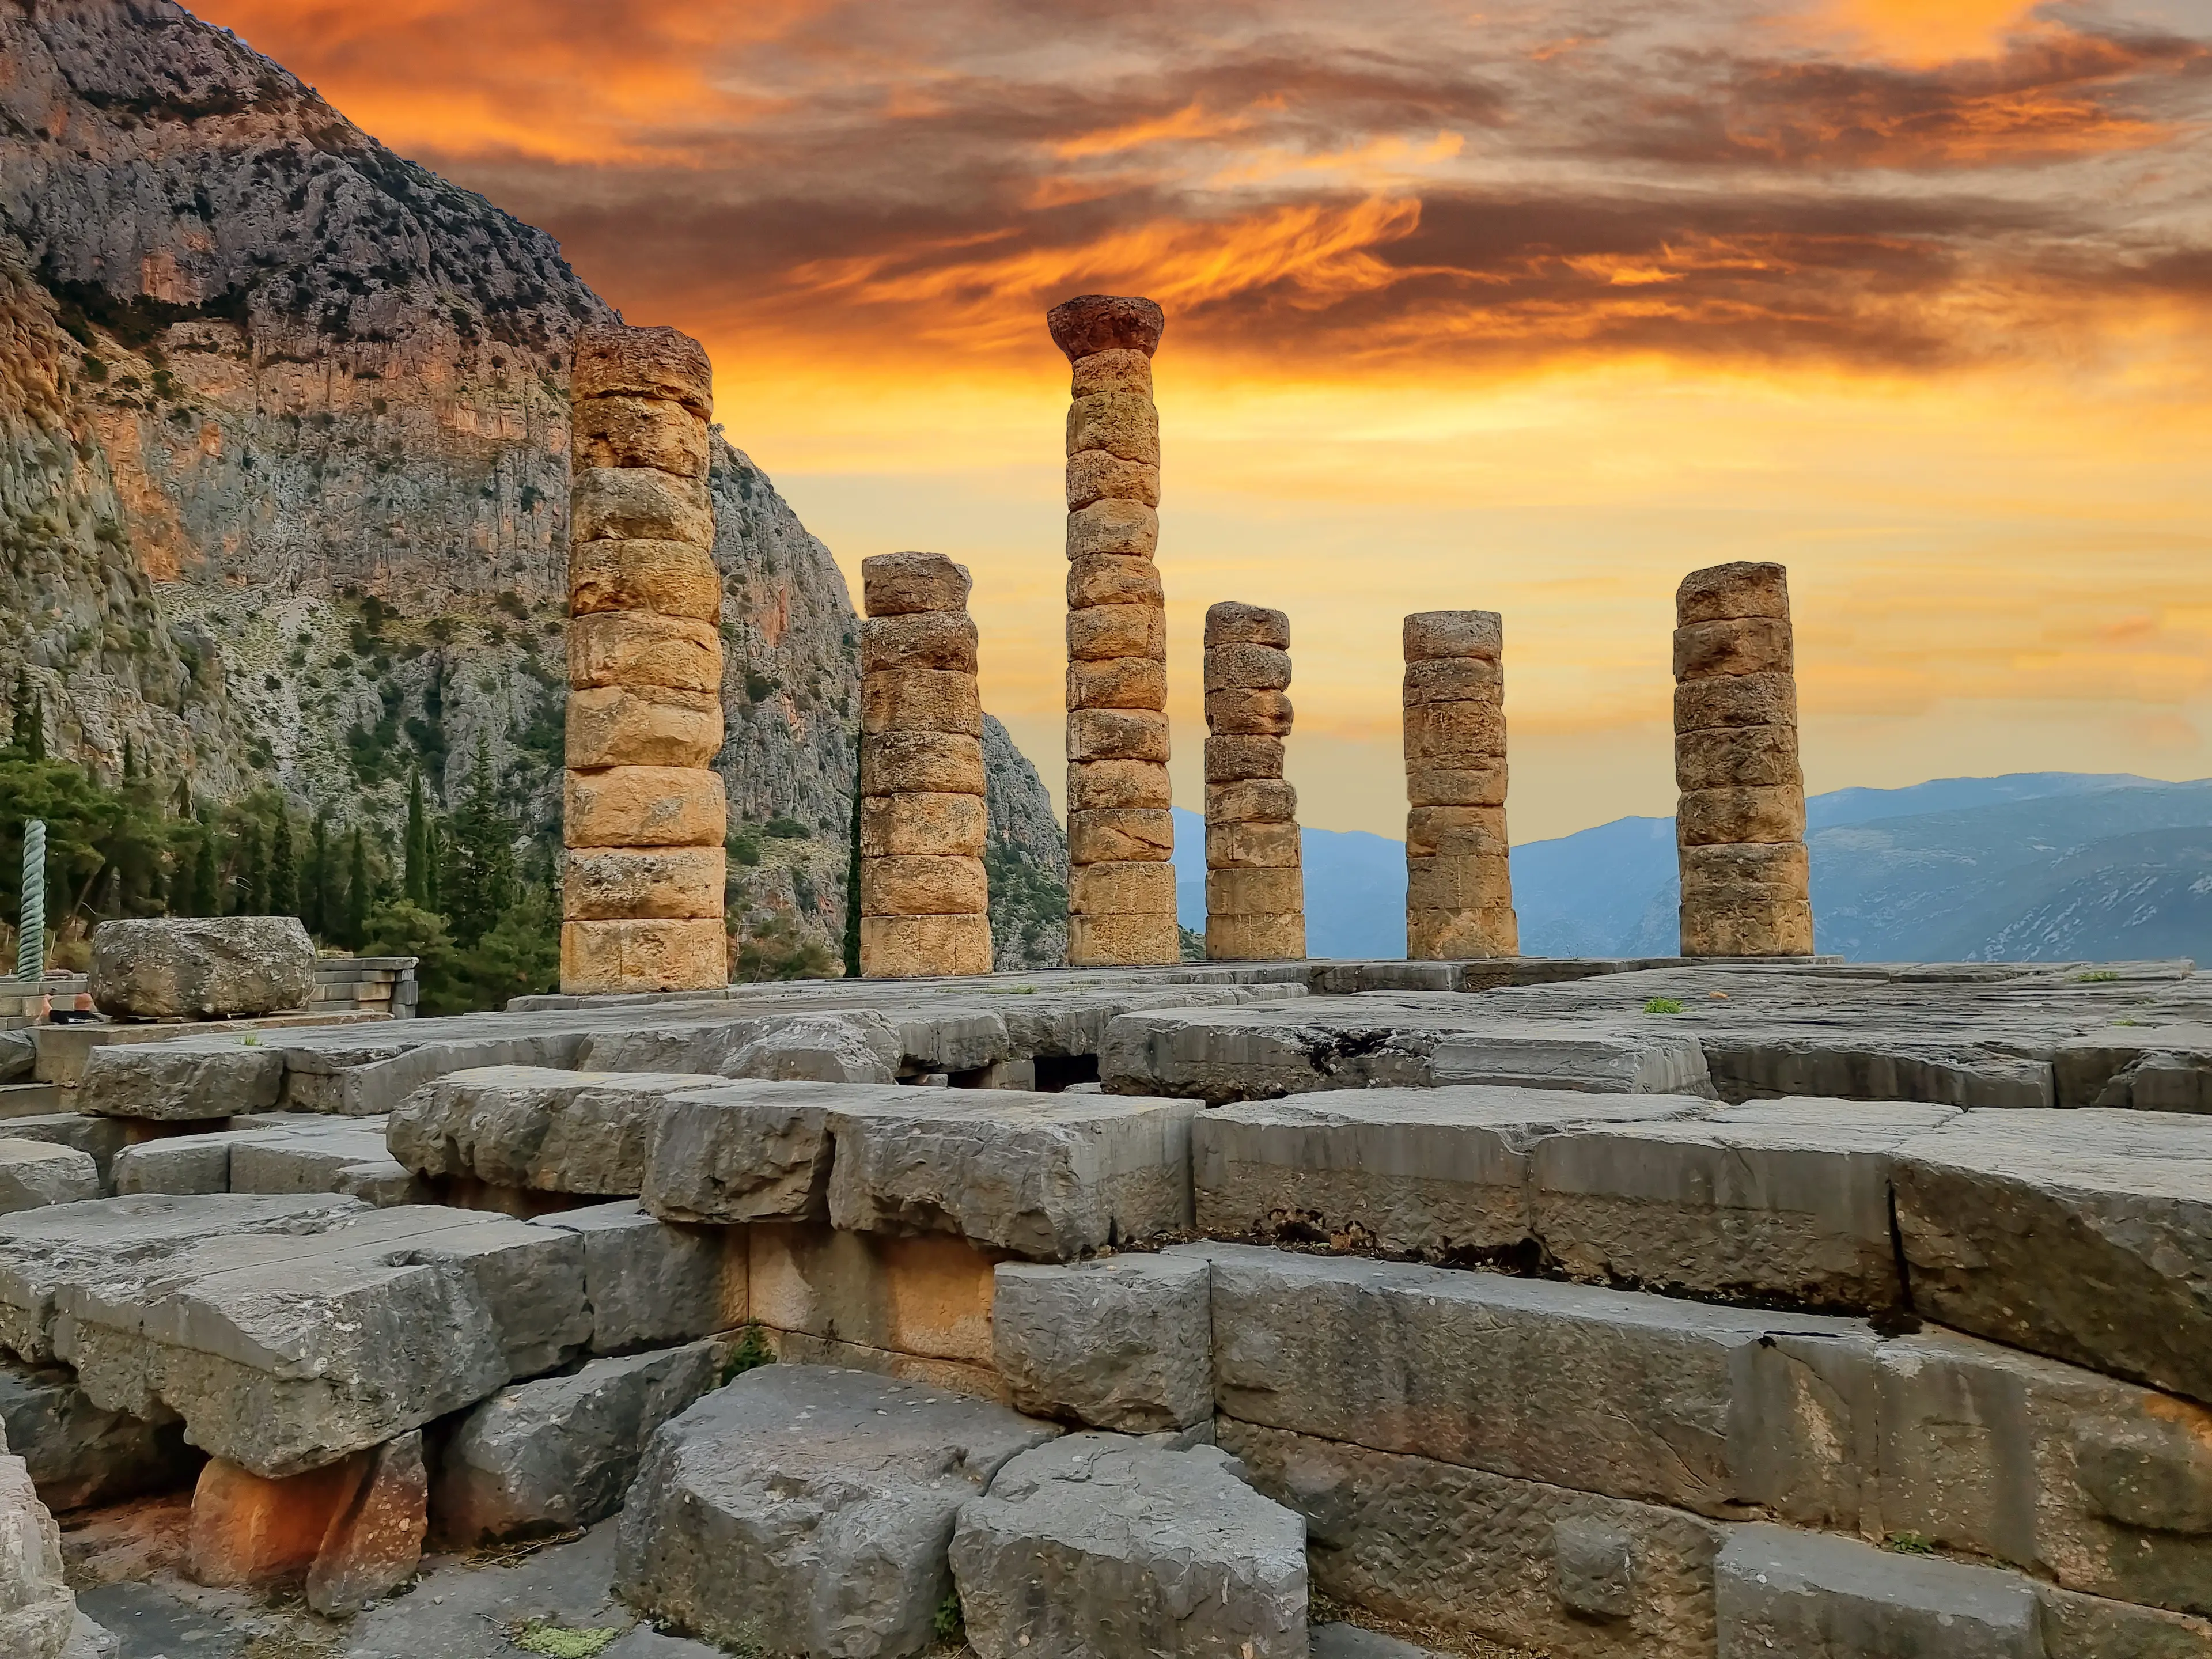 1-Day Family Adventure in Delphi for Local Explorers